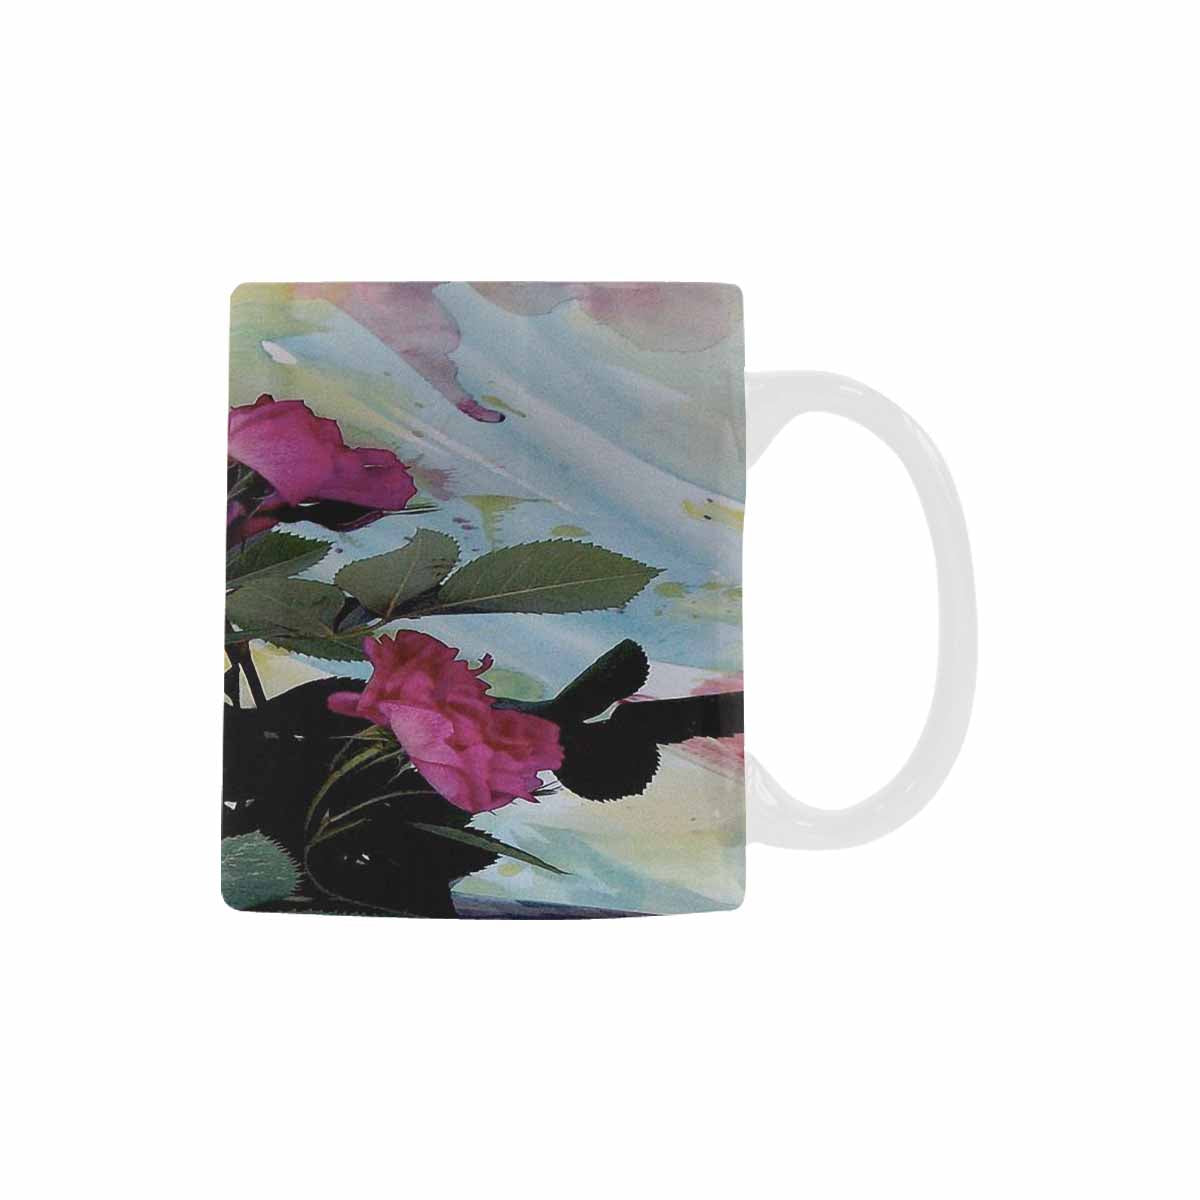 Vintage floral coffee mug or tea cup, Design 21